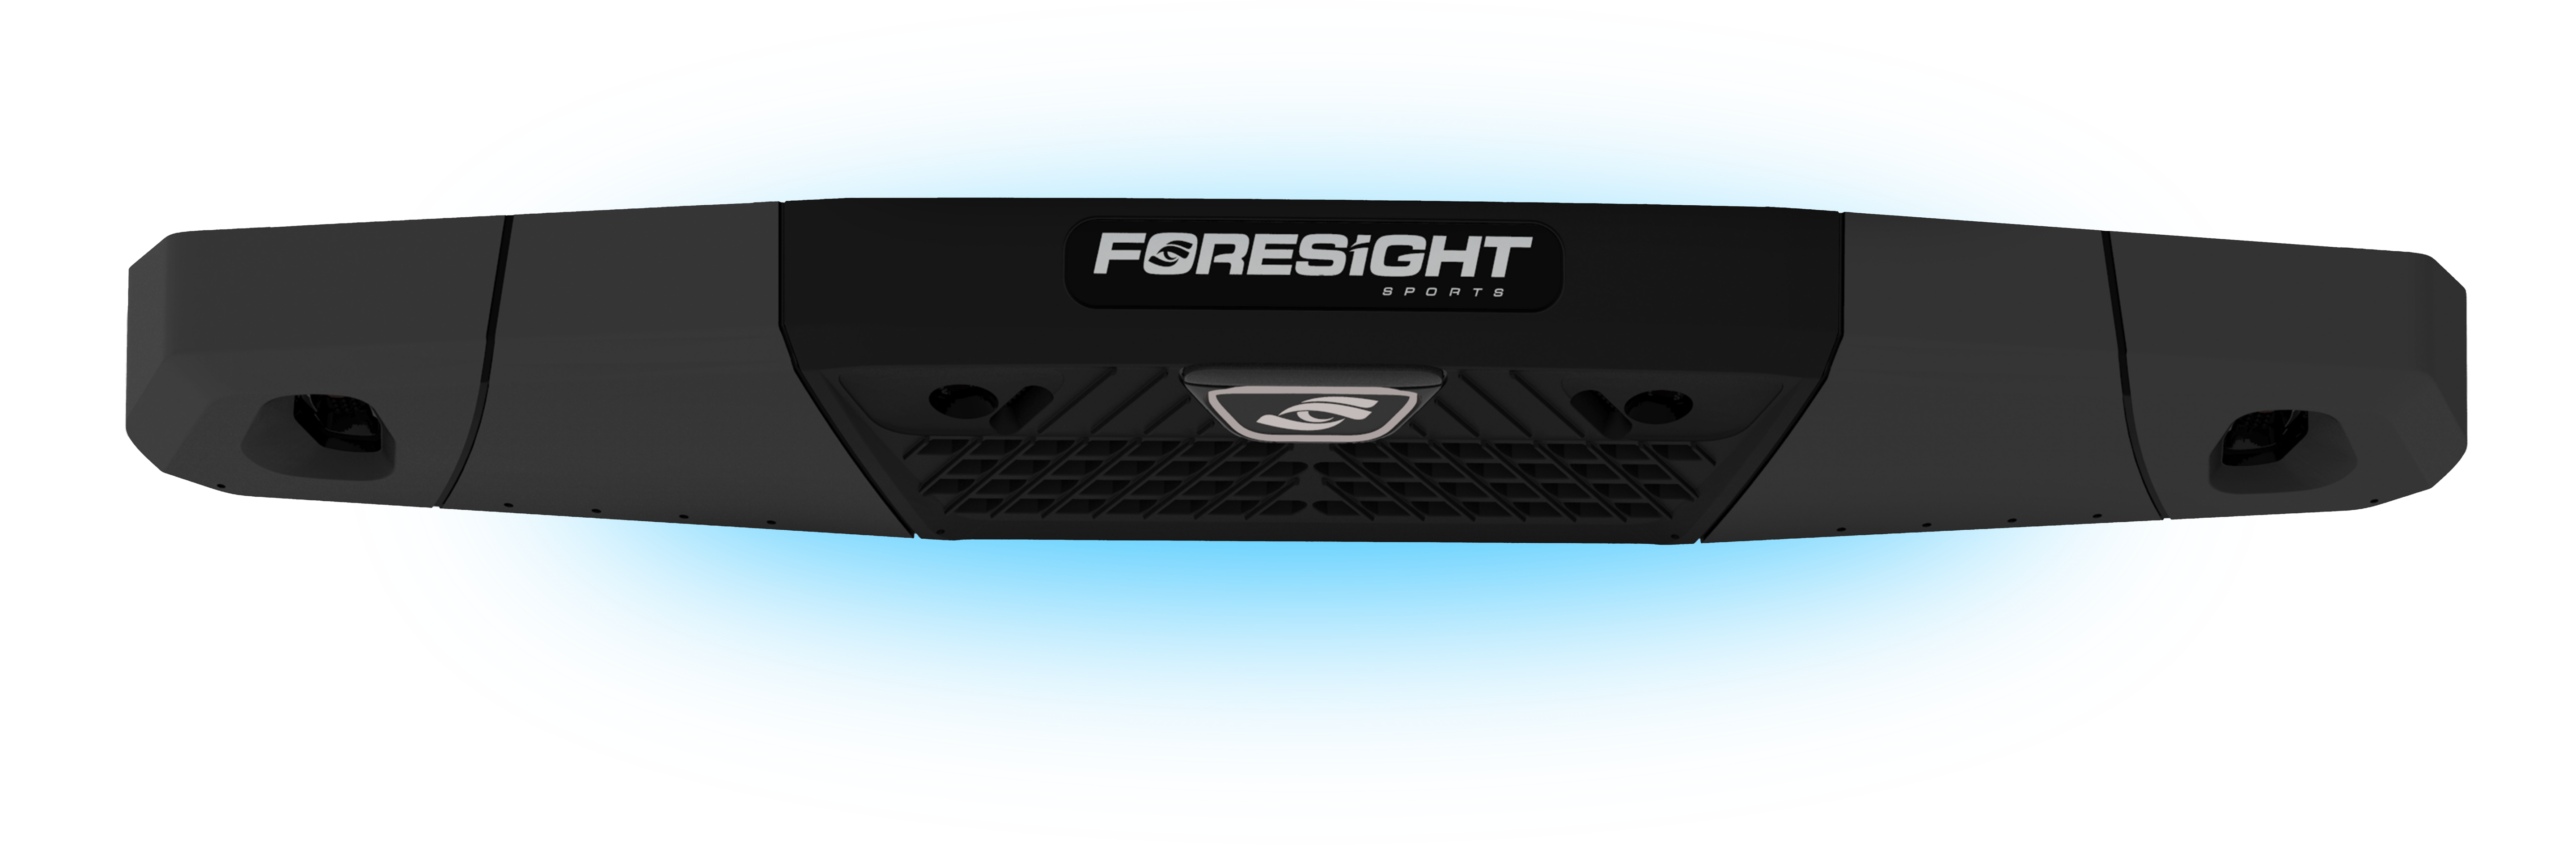 Foresight Falcon Launch Monitor